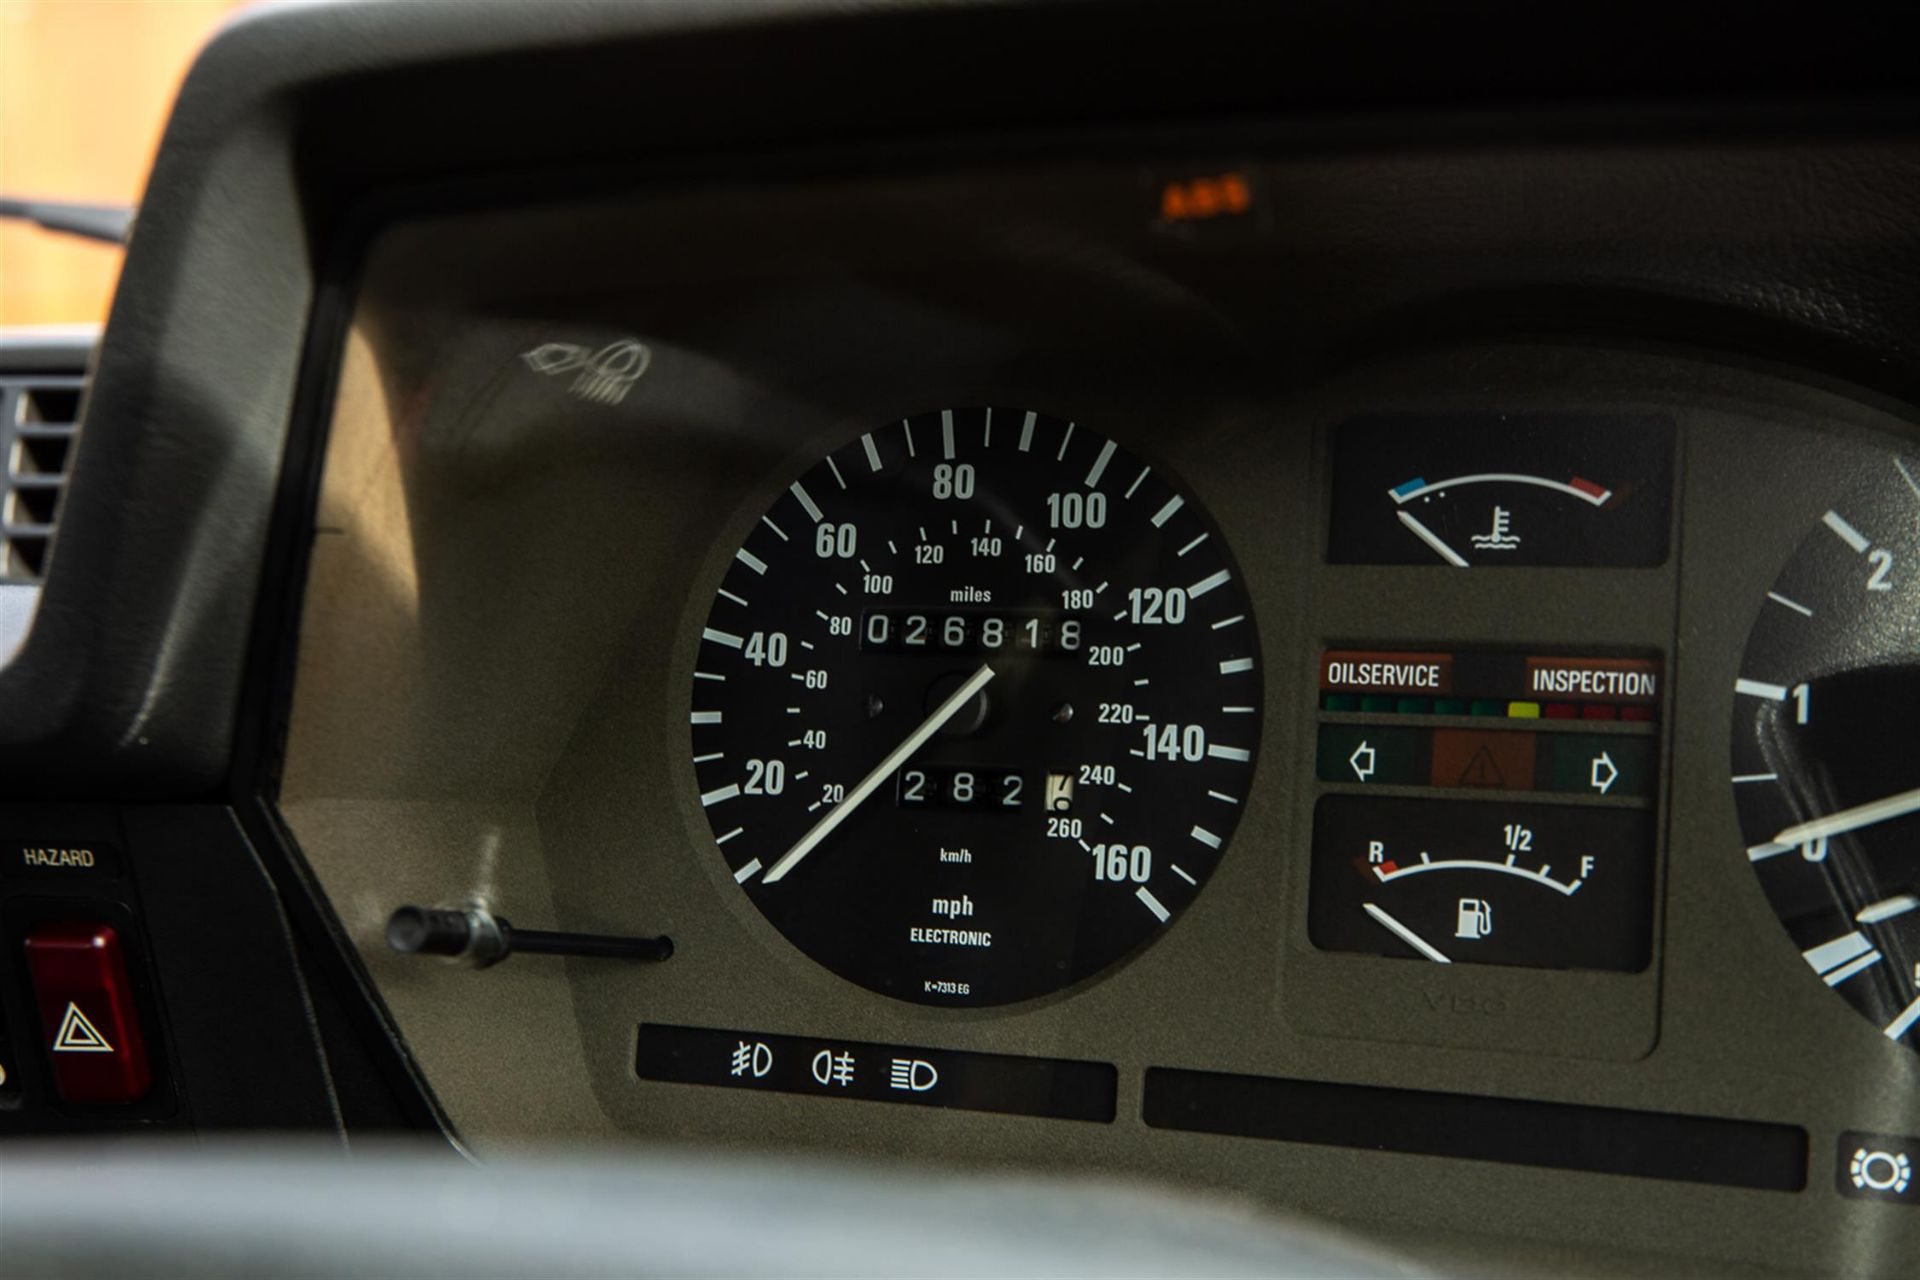 1982 BMW 635 CSi (E24) - 27,000 miles - Image 10 of 10